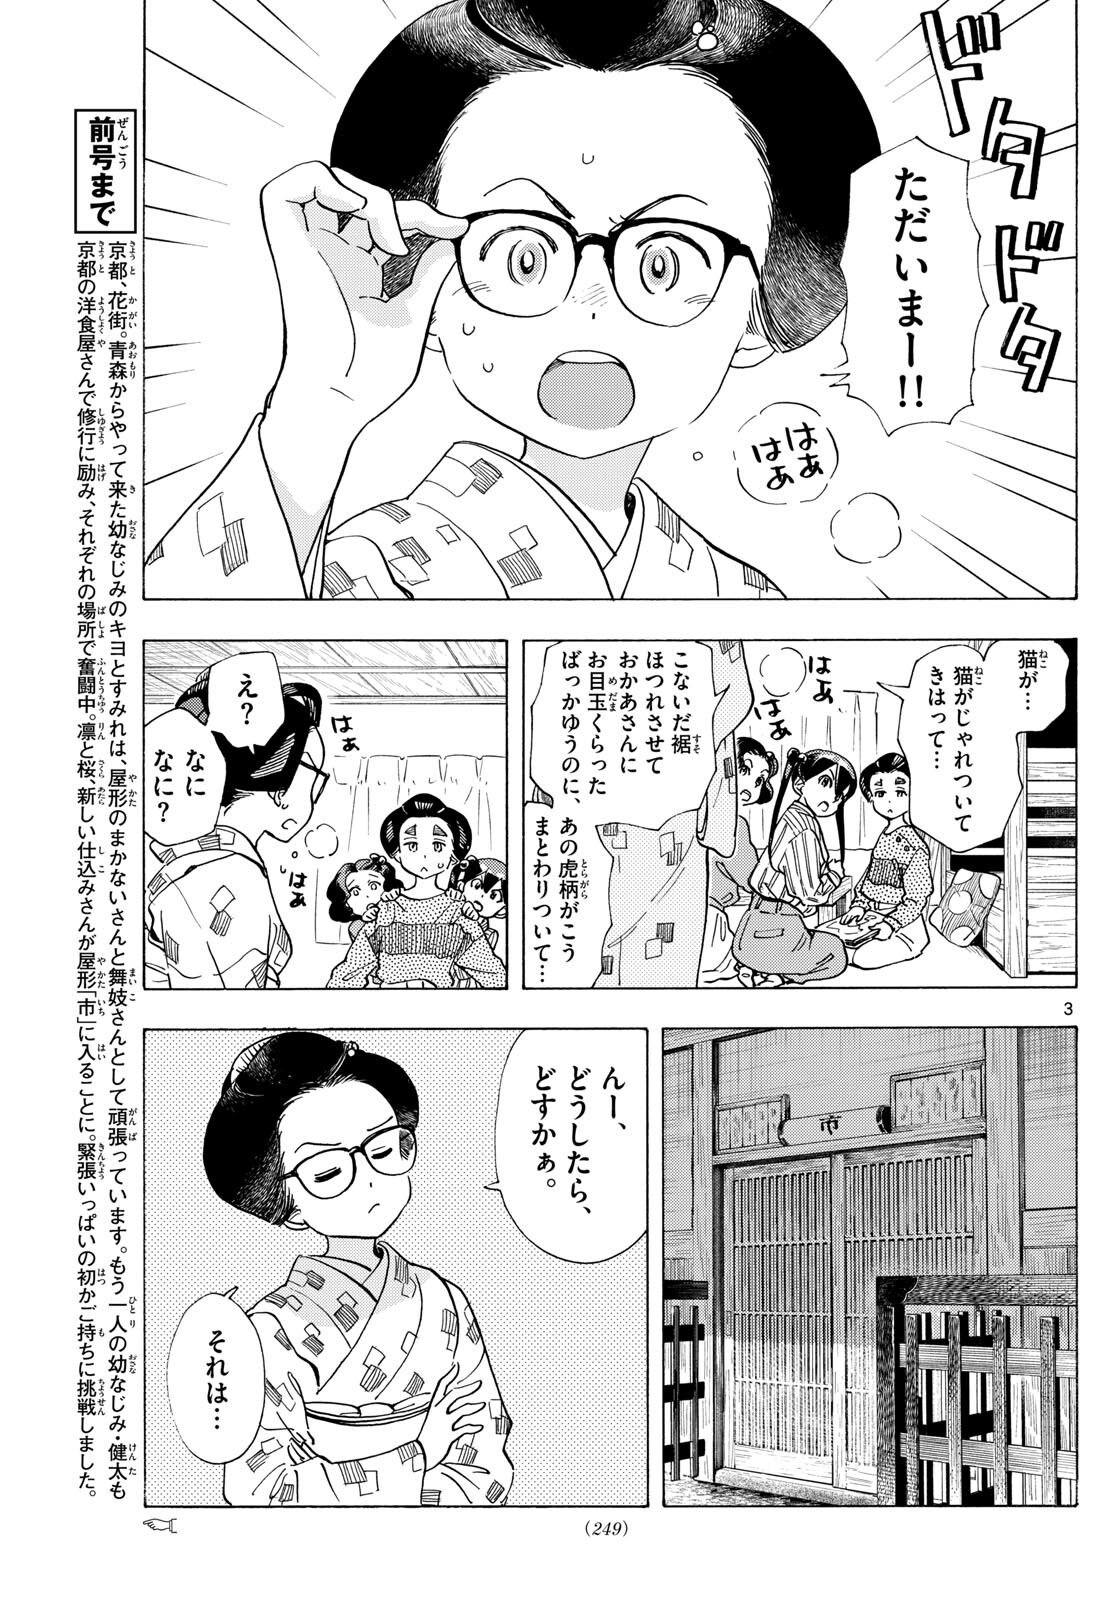 Maiko-san Chi no Makanai-san - Chapter 291 - Page 3